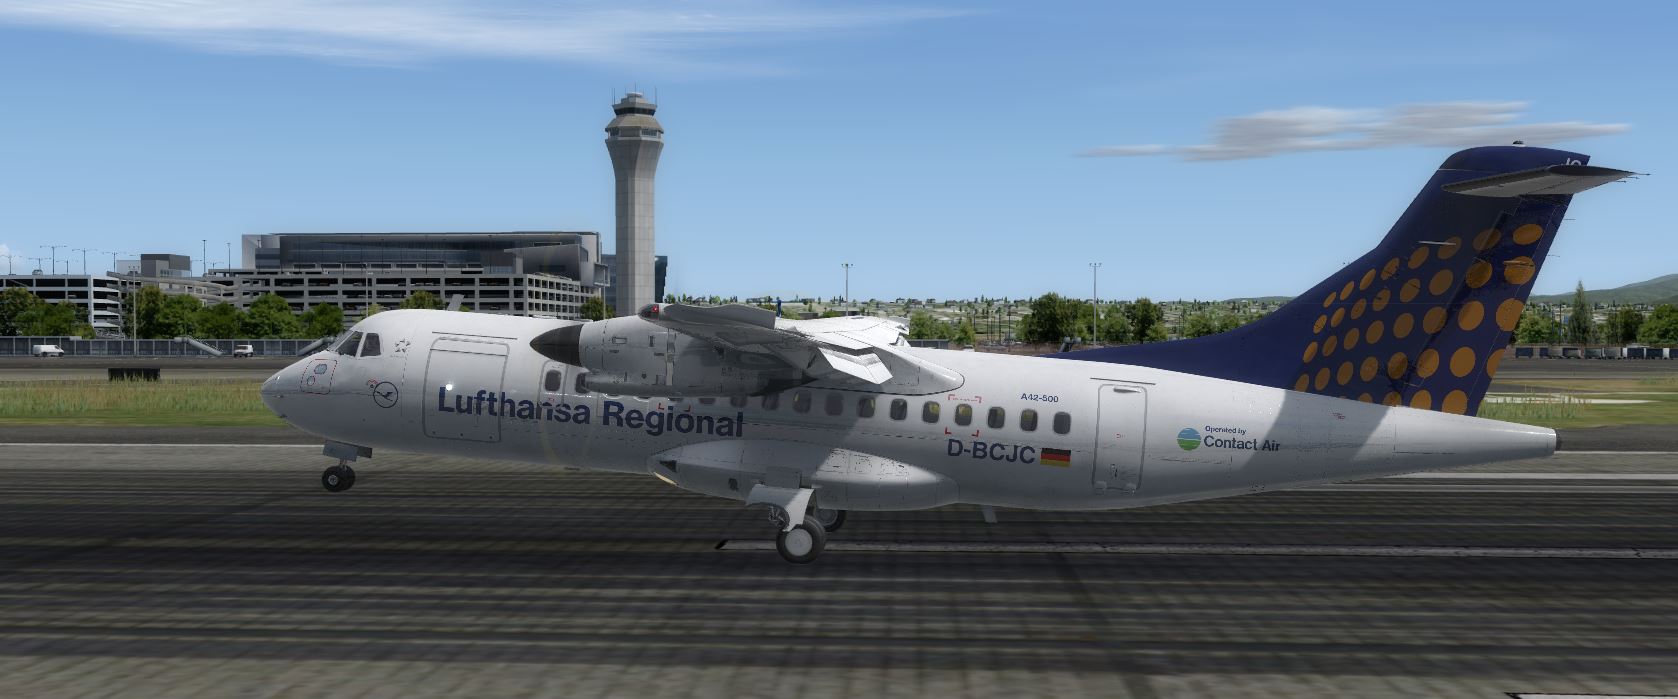 ATR42-500 Lufthansa-6690 